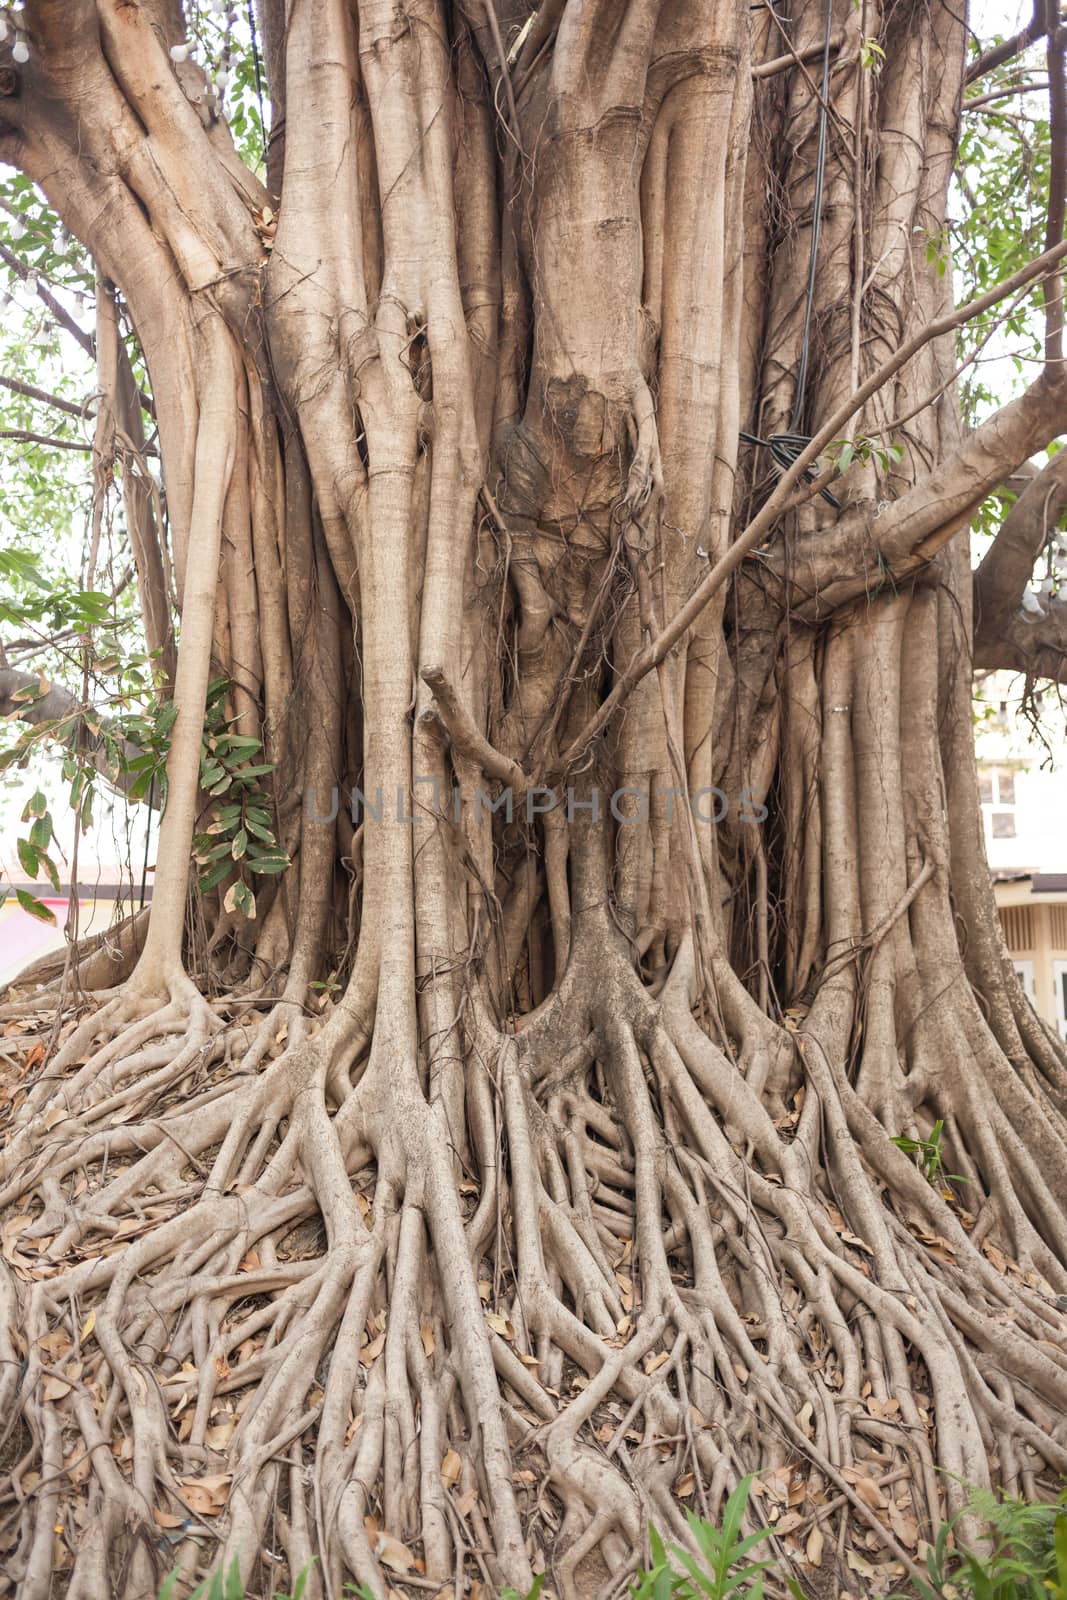 Beautiful Banyan tree in public park city center .